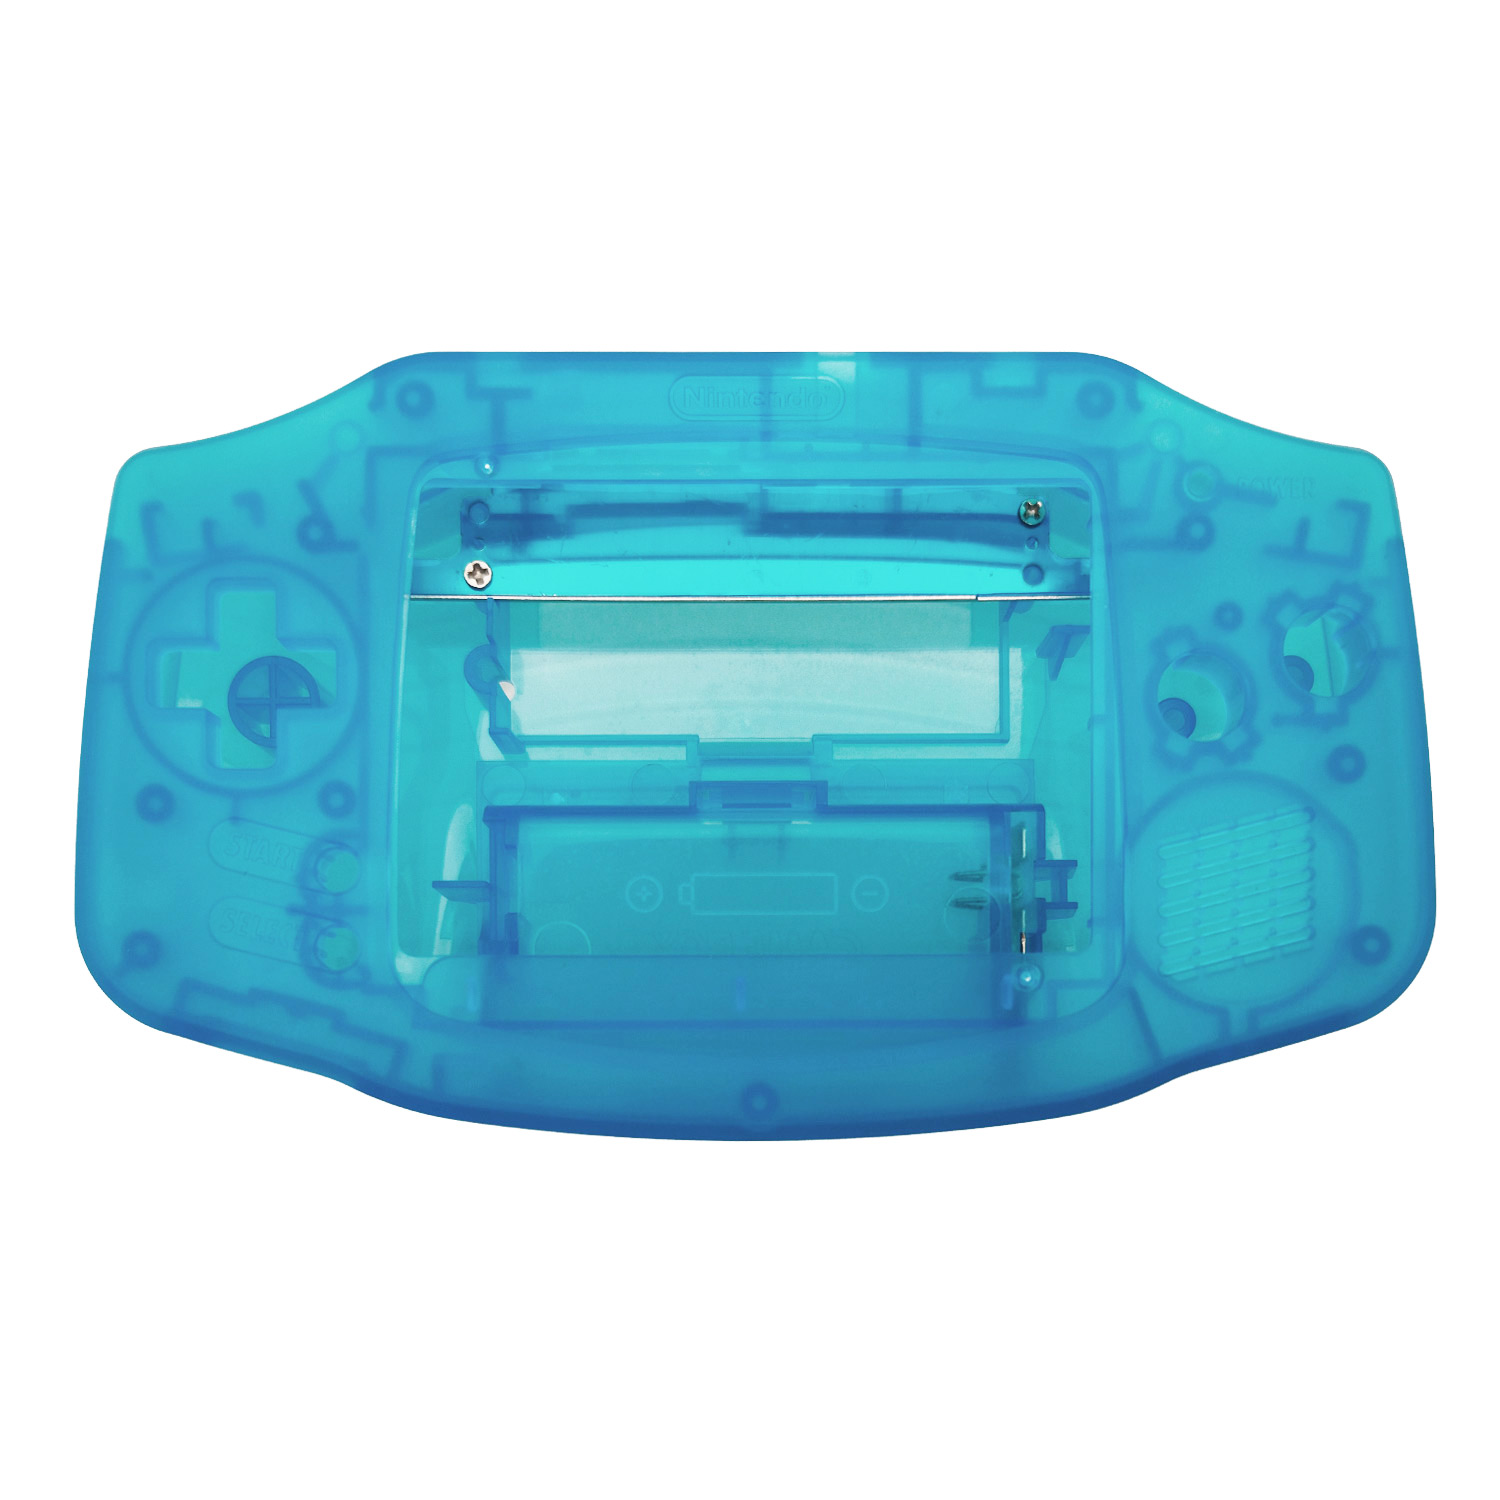 Game Boy Advance Etui (Blauw Transparant)